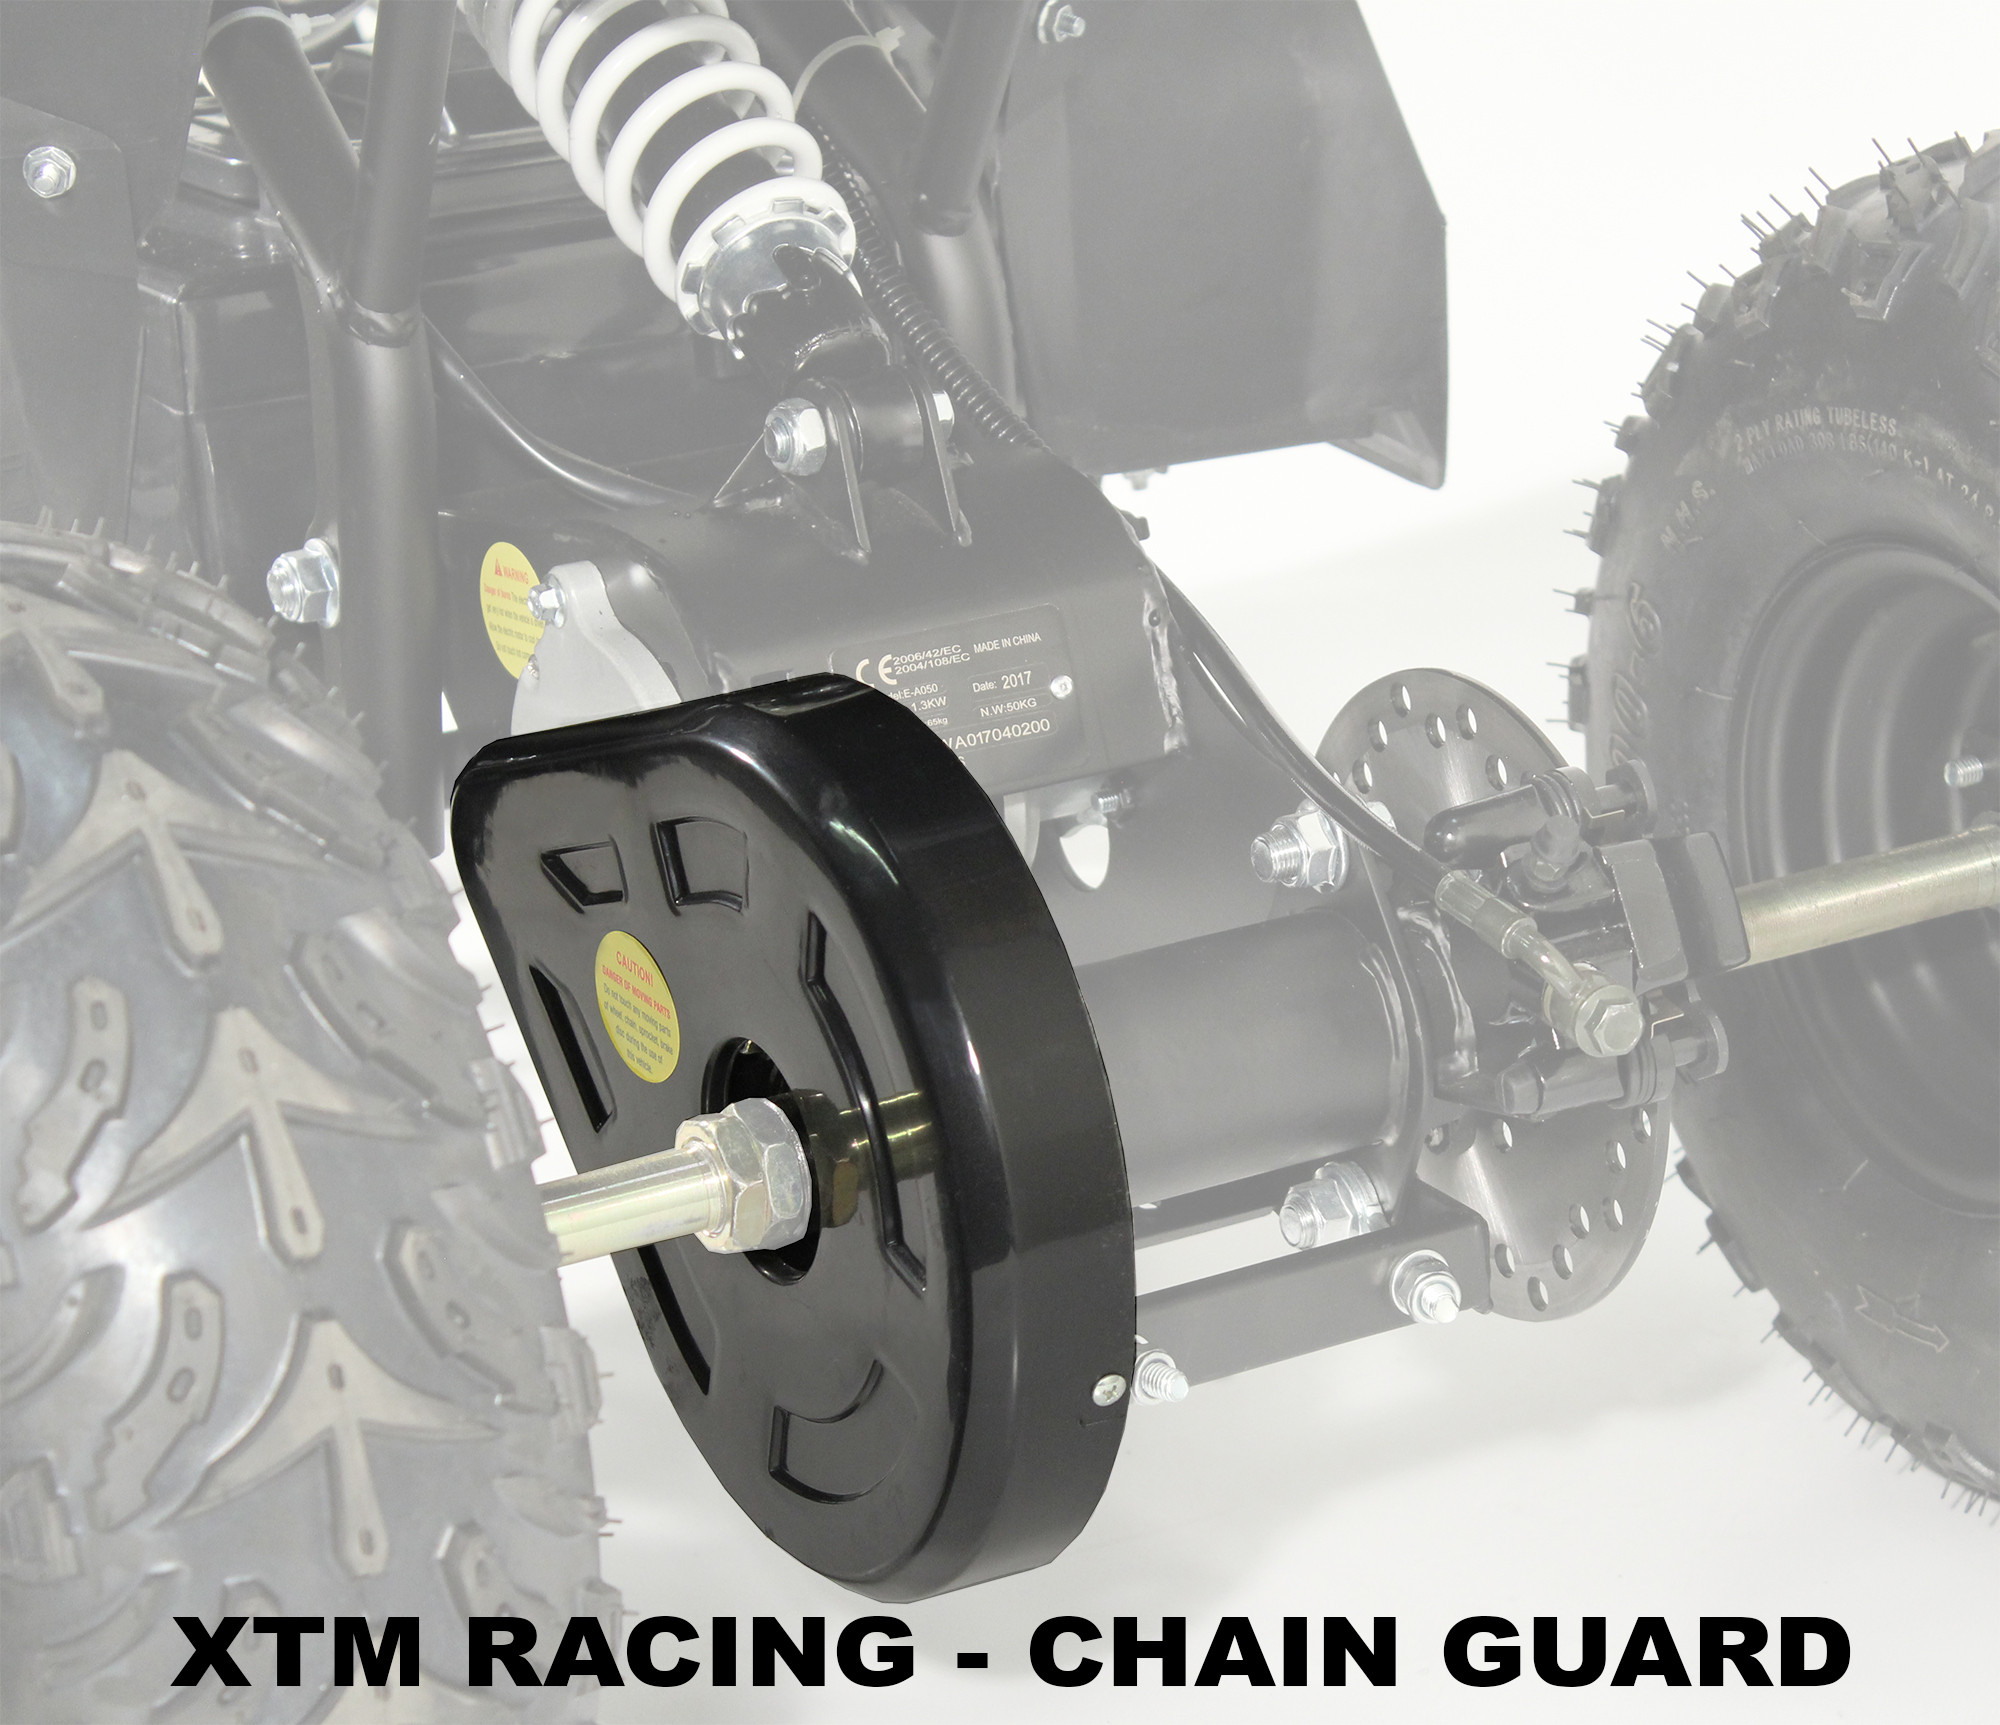 XTM RACING QUAD COMPLETE CHAIN GUARD